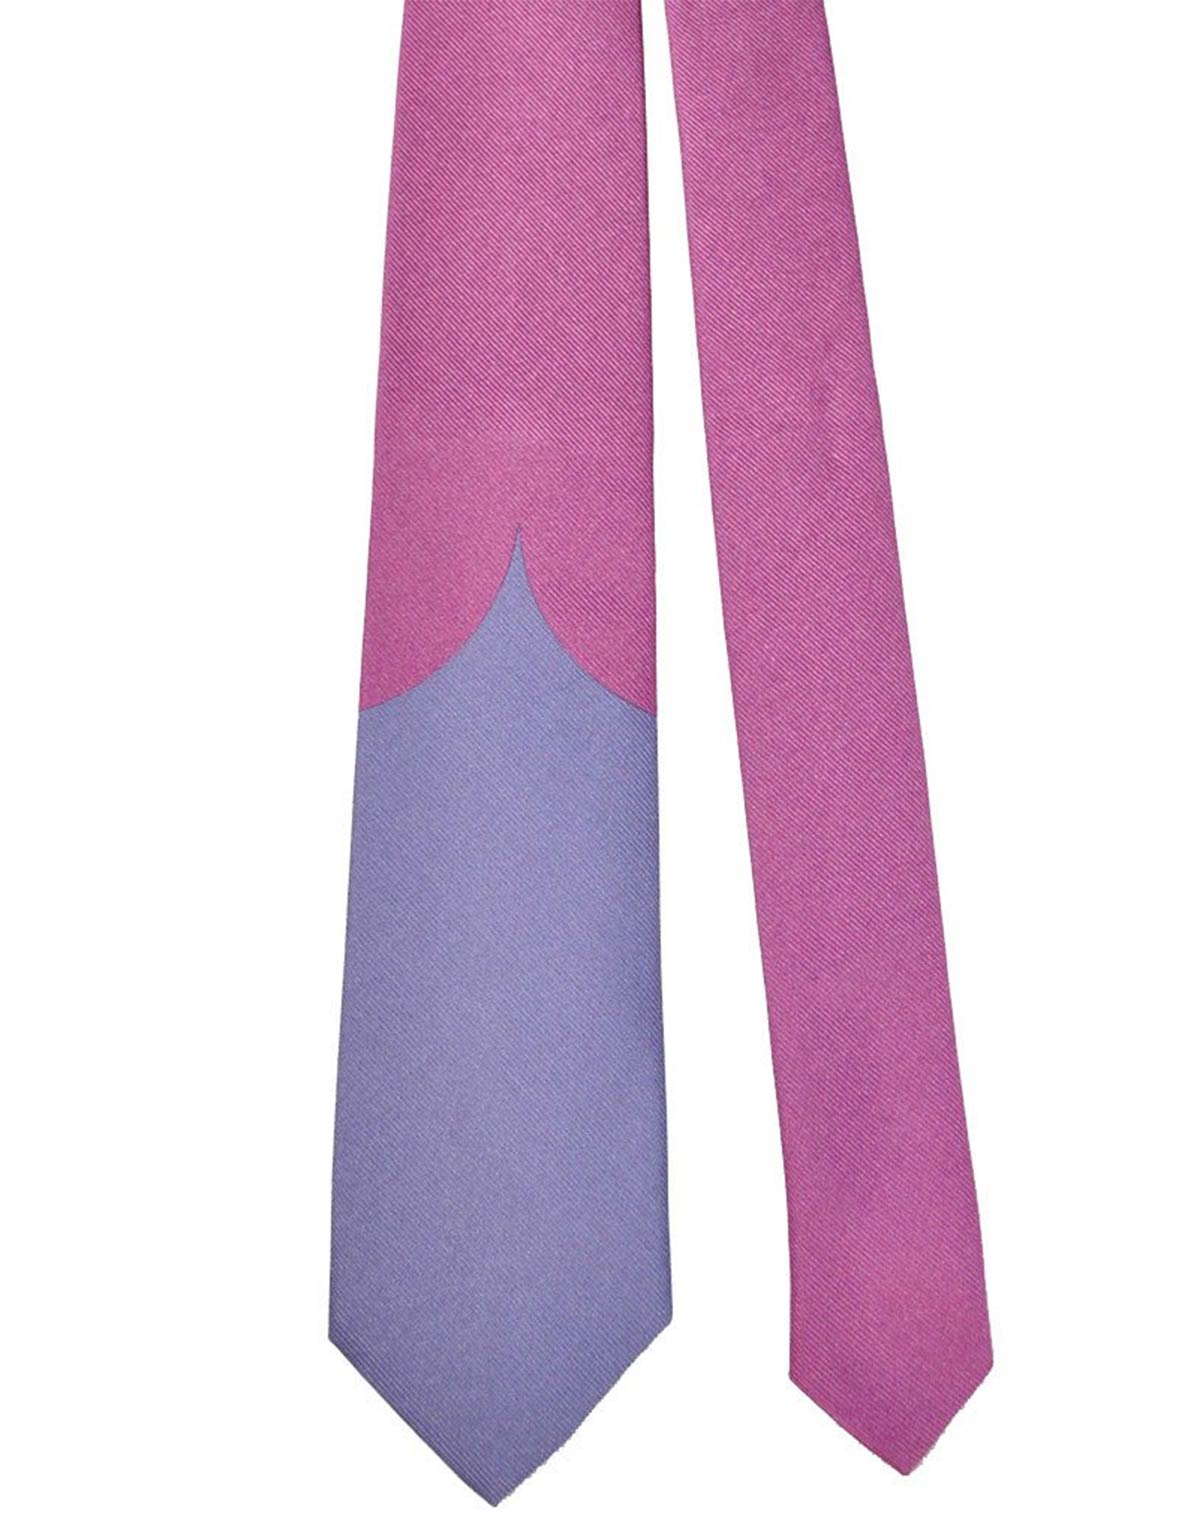 Gene Meyer Tie Unique Pink & Lilac Design SALE